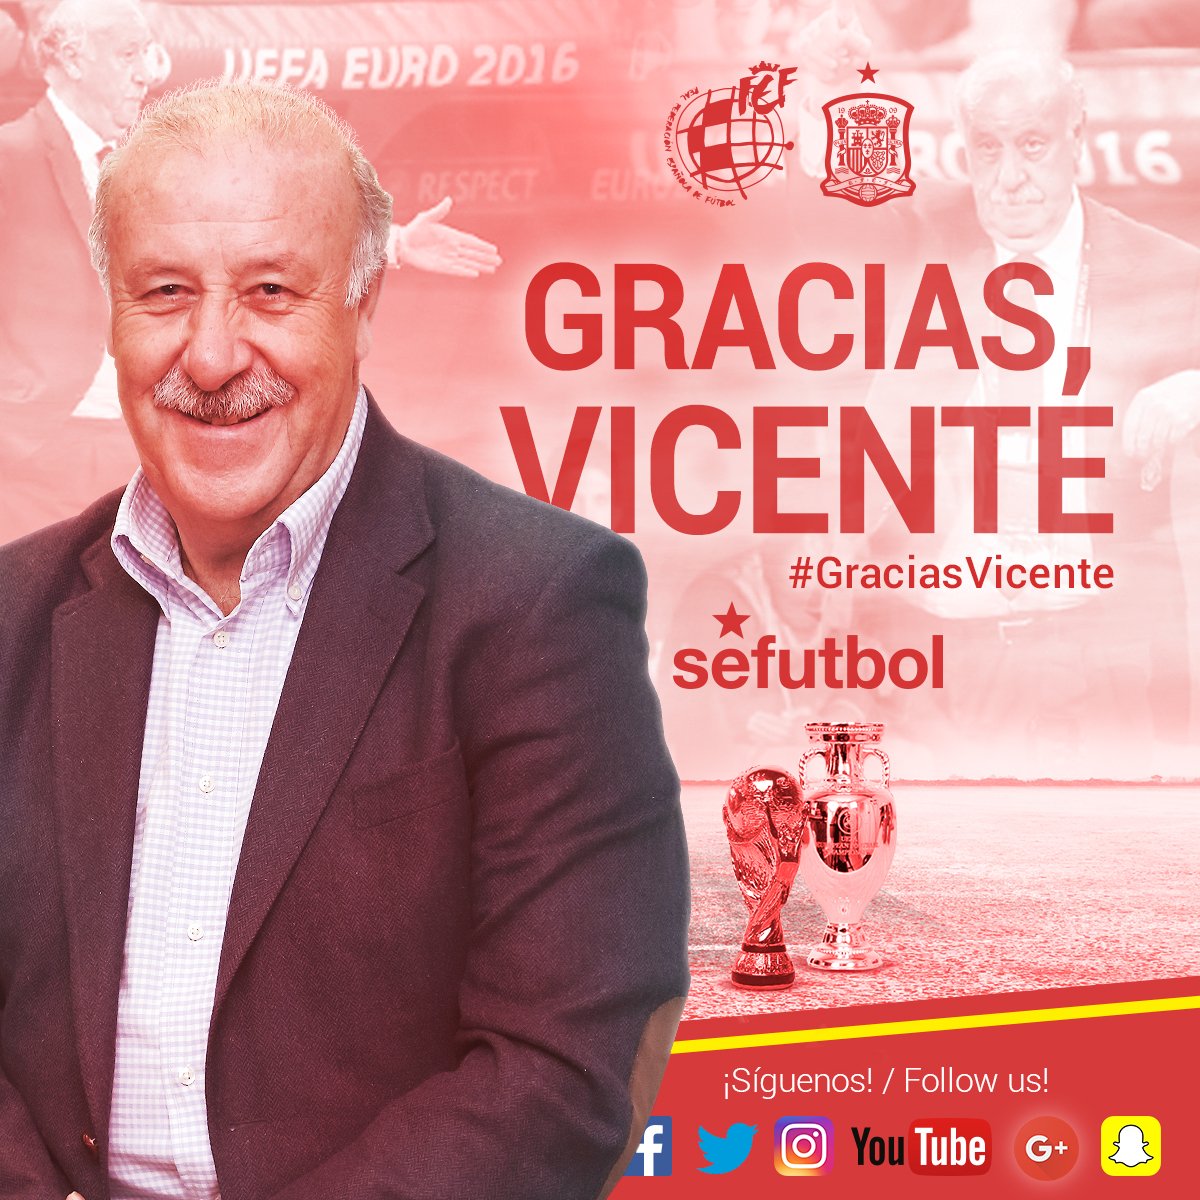 Selección Española de Fútbol on "OFFICIAL | Del Bosque, no longer to Spain (@SeFutbol) Head Coach #GraciasVicente https://t.co/b6XbIud2Yp https://t.co/H7t8LX2ZlG" / Twitter